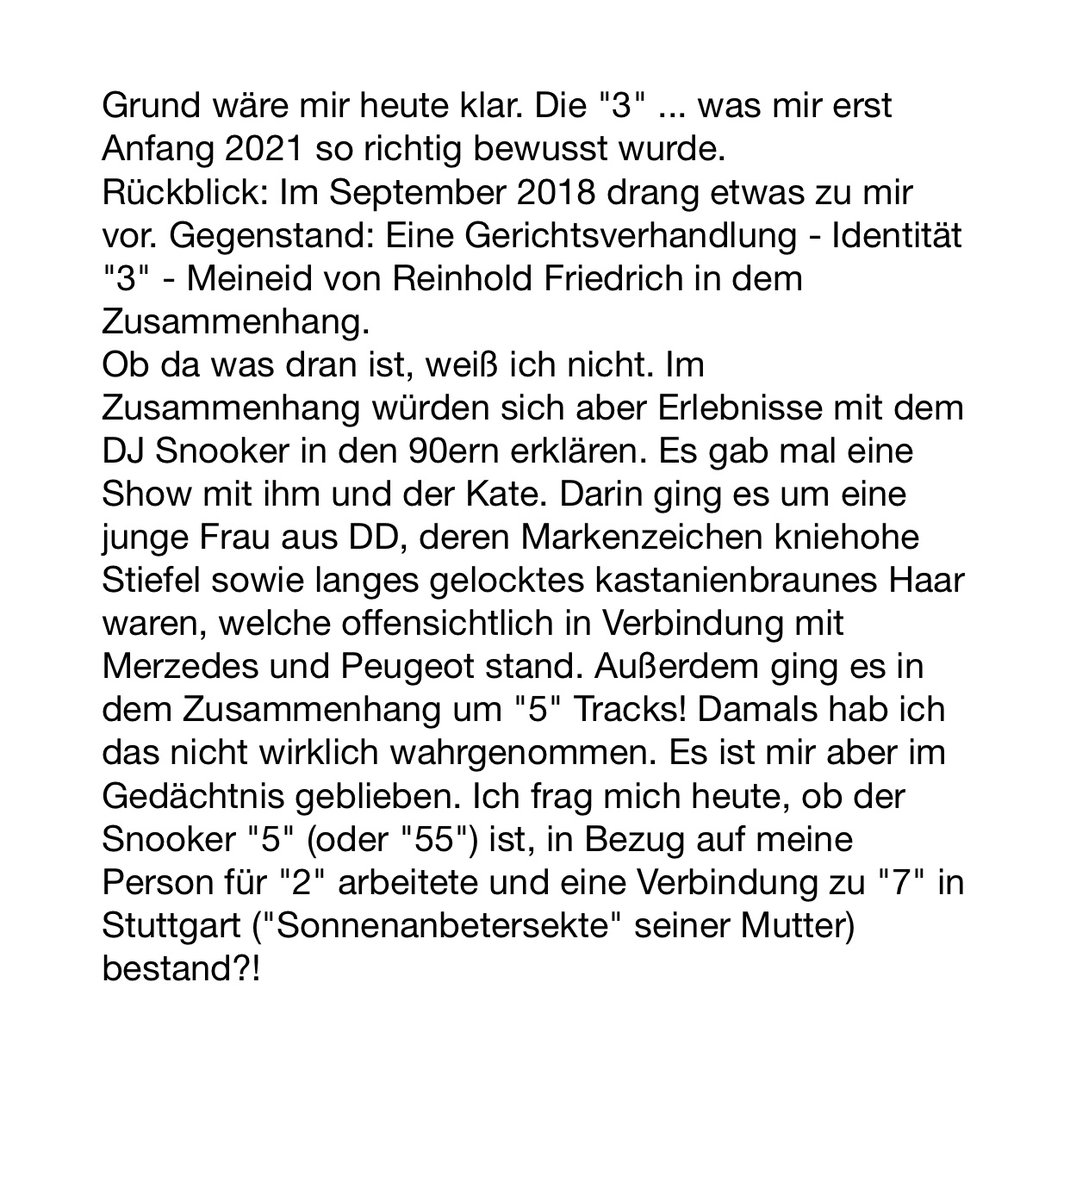 #GEMAC #AkkuKonferenz2012
#ReinholdFriedrich
#SteffenLässig aka #DJSnooker aka #ReneGade
'2' '5' '55' '7'
2/2.